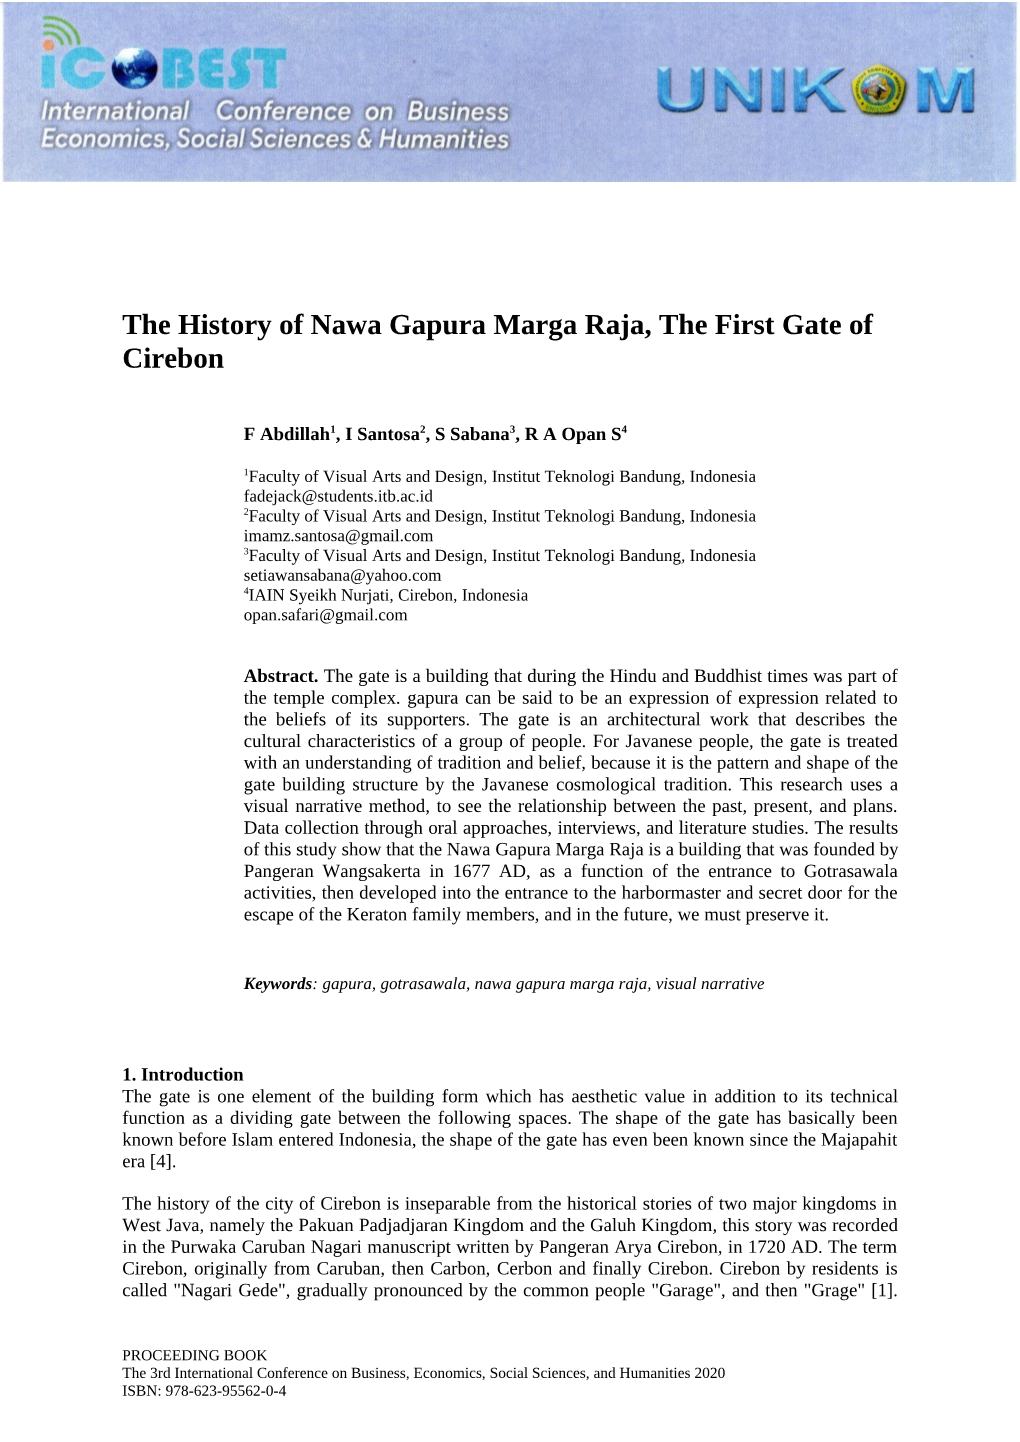 The History of Nawa Gapura Marga Raja, the First Gate of Cirebon